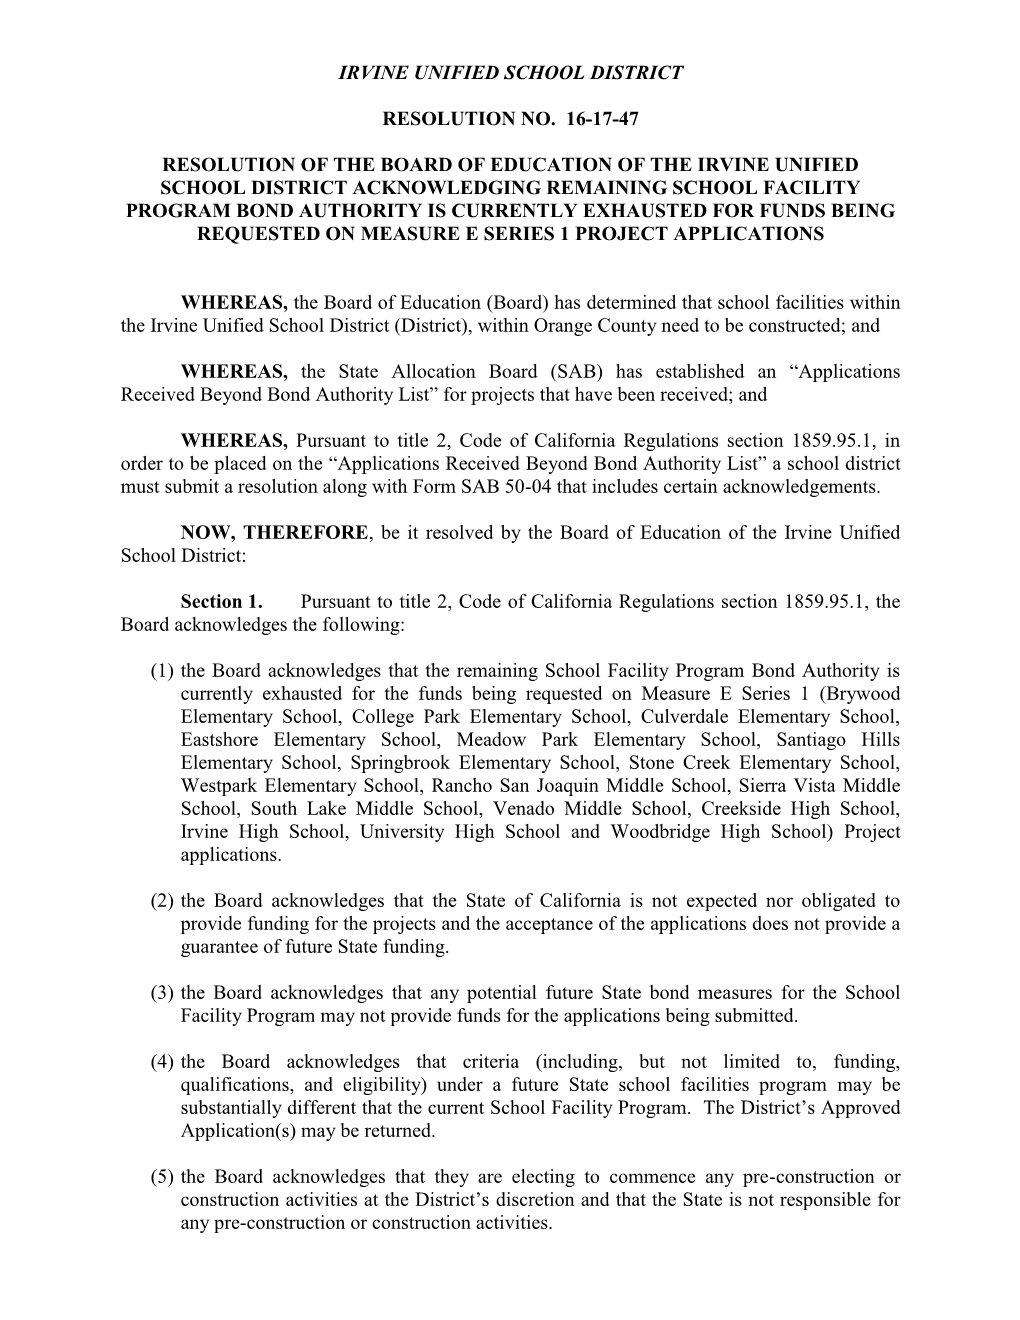 Irvine Unified School District Resolution No. 16-17-47